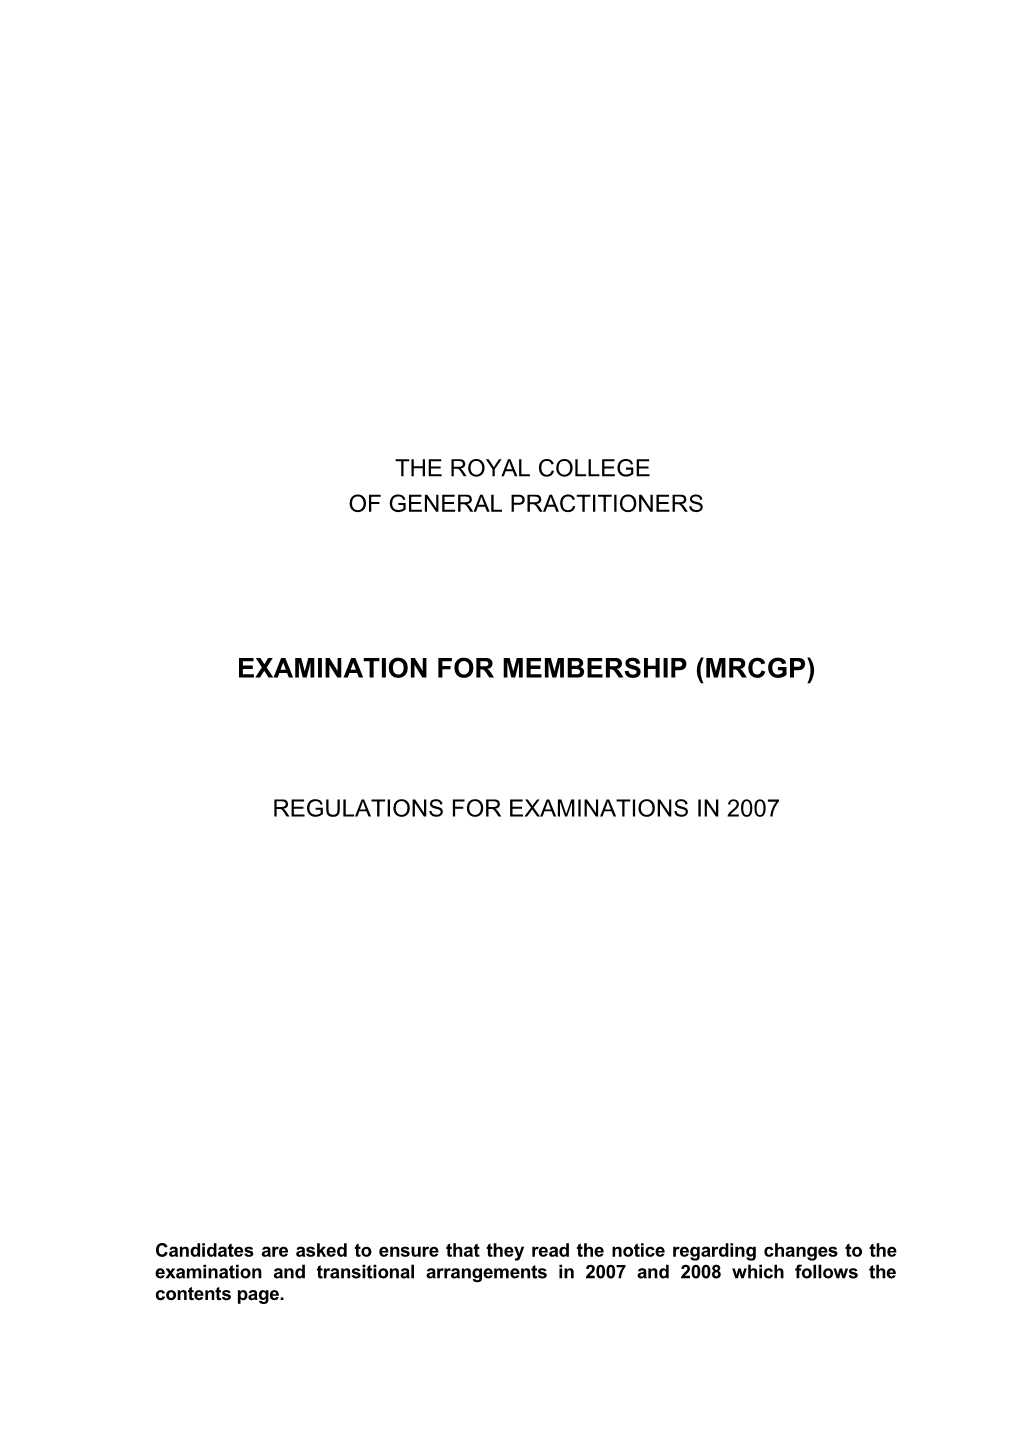 Examination for Membership (Mrcgp)